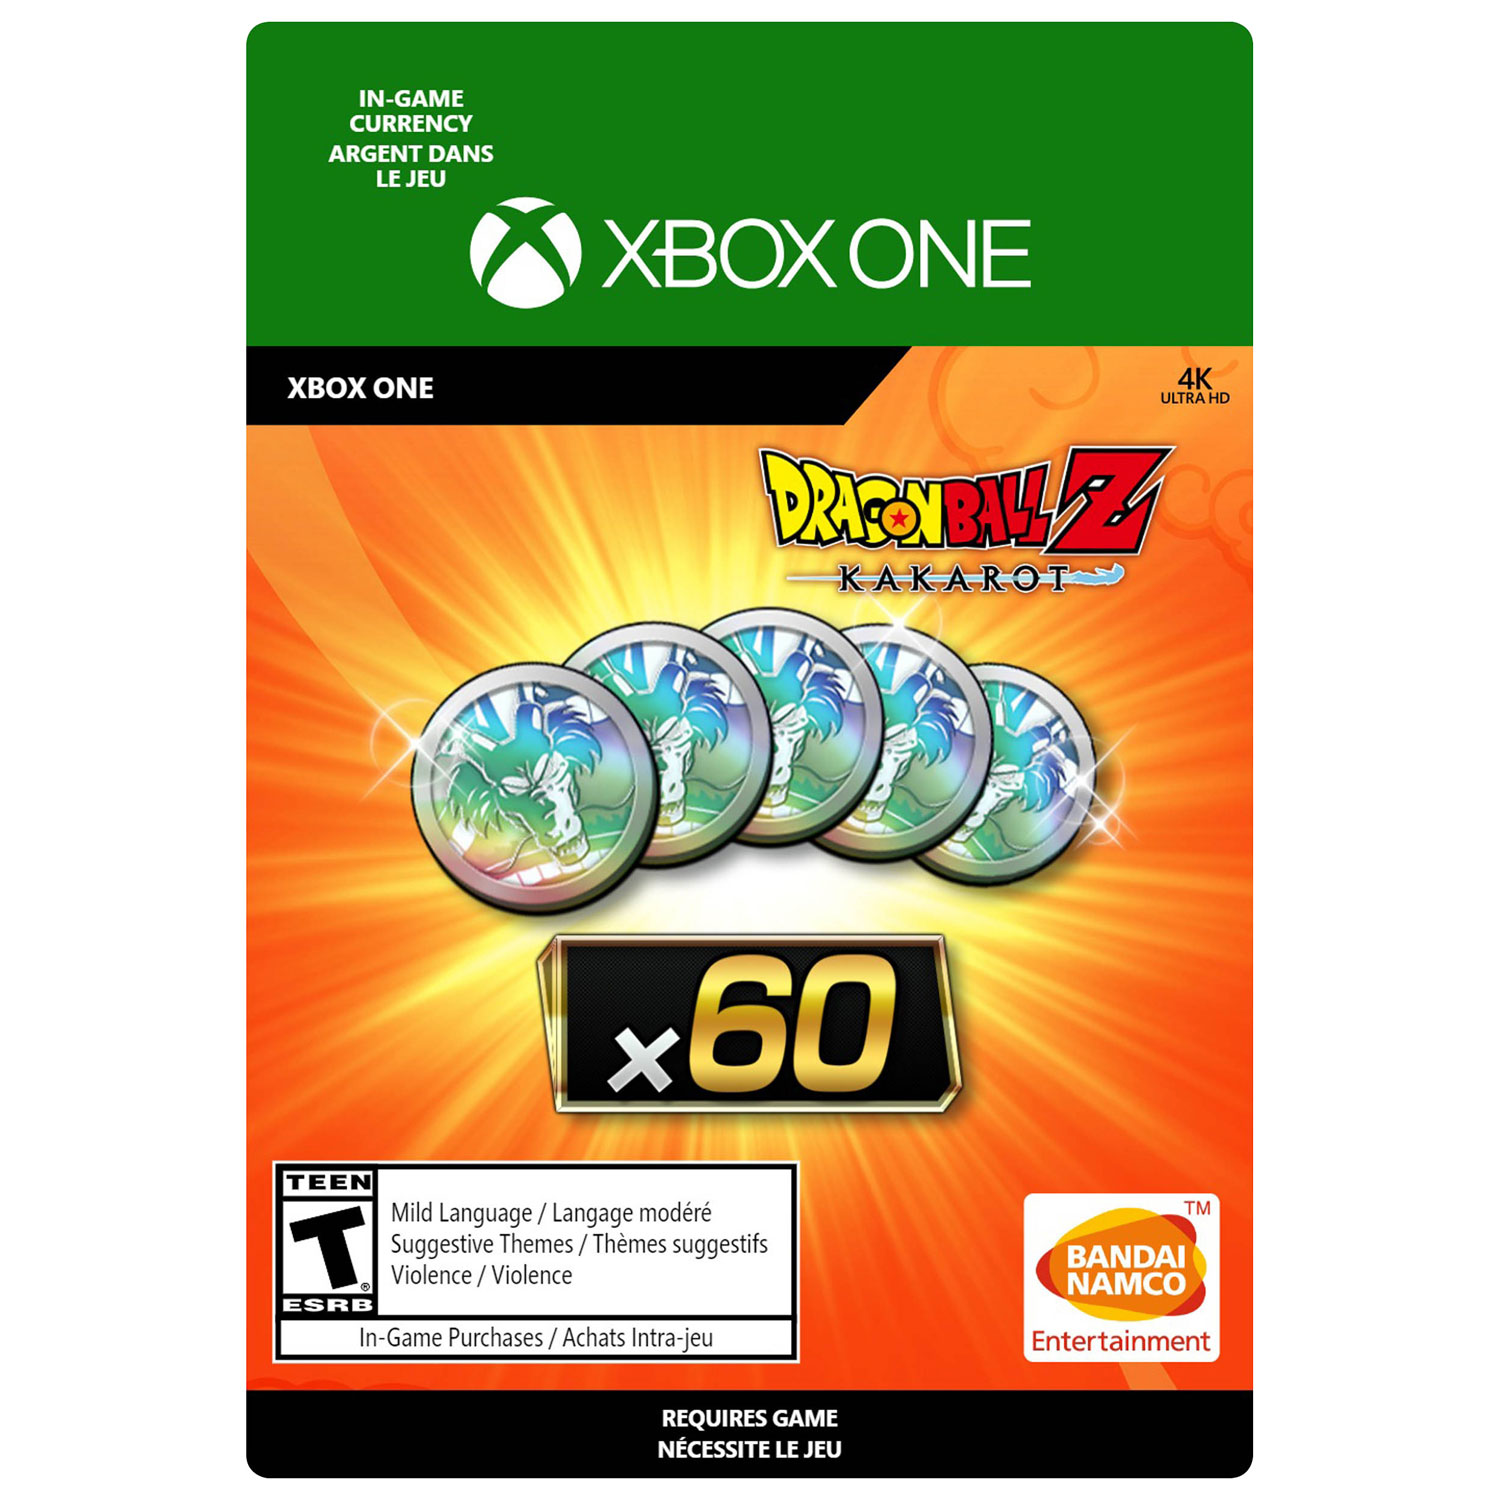 Dragon Ball Z: Kakarot - 60 Platinum Coins (Xbox One) - Digital Download